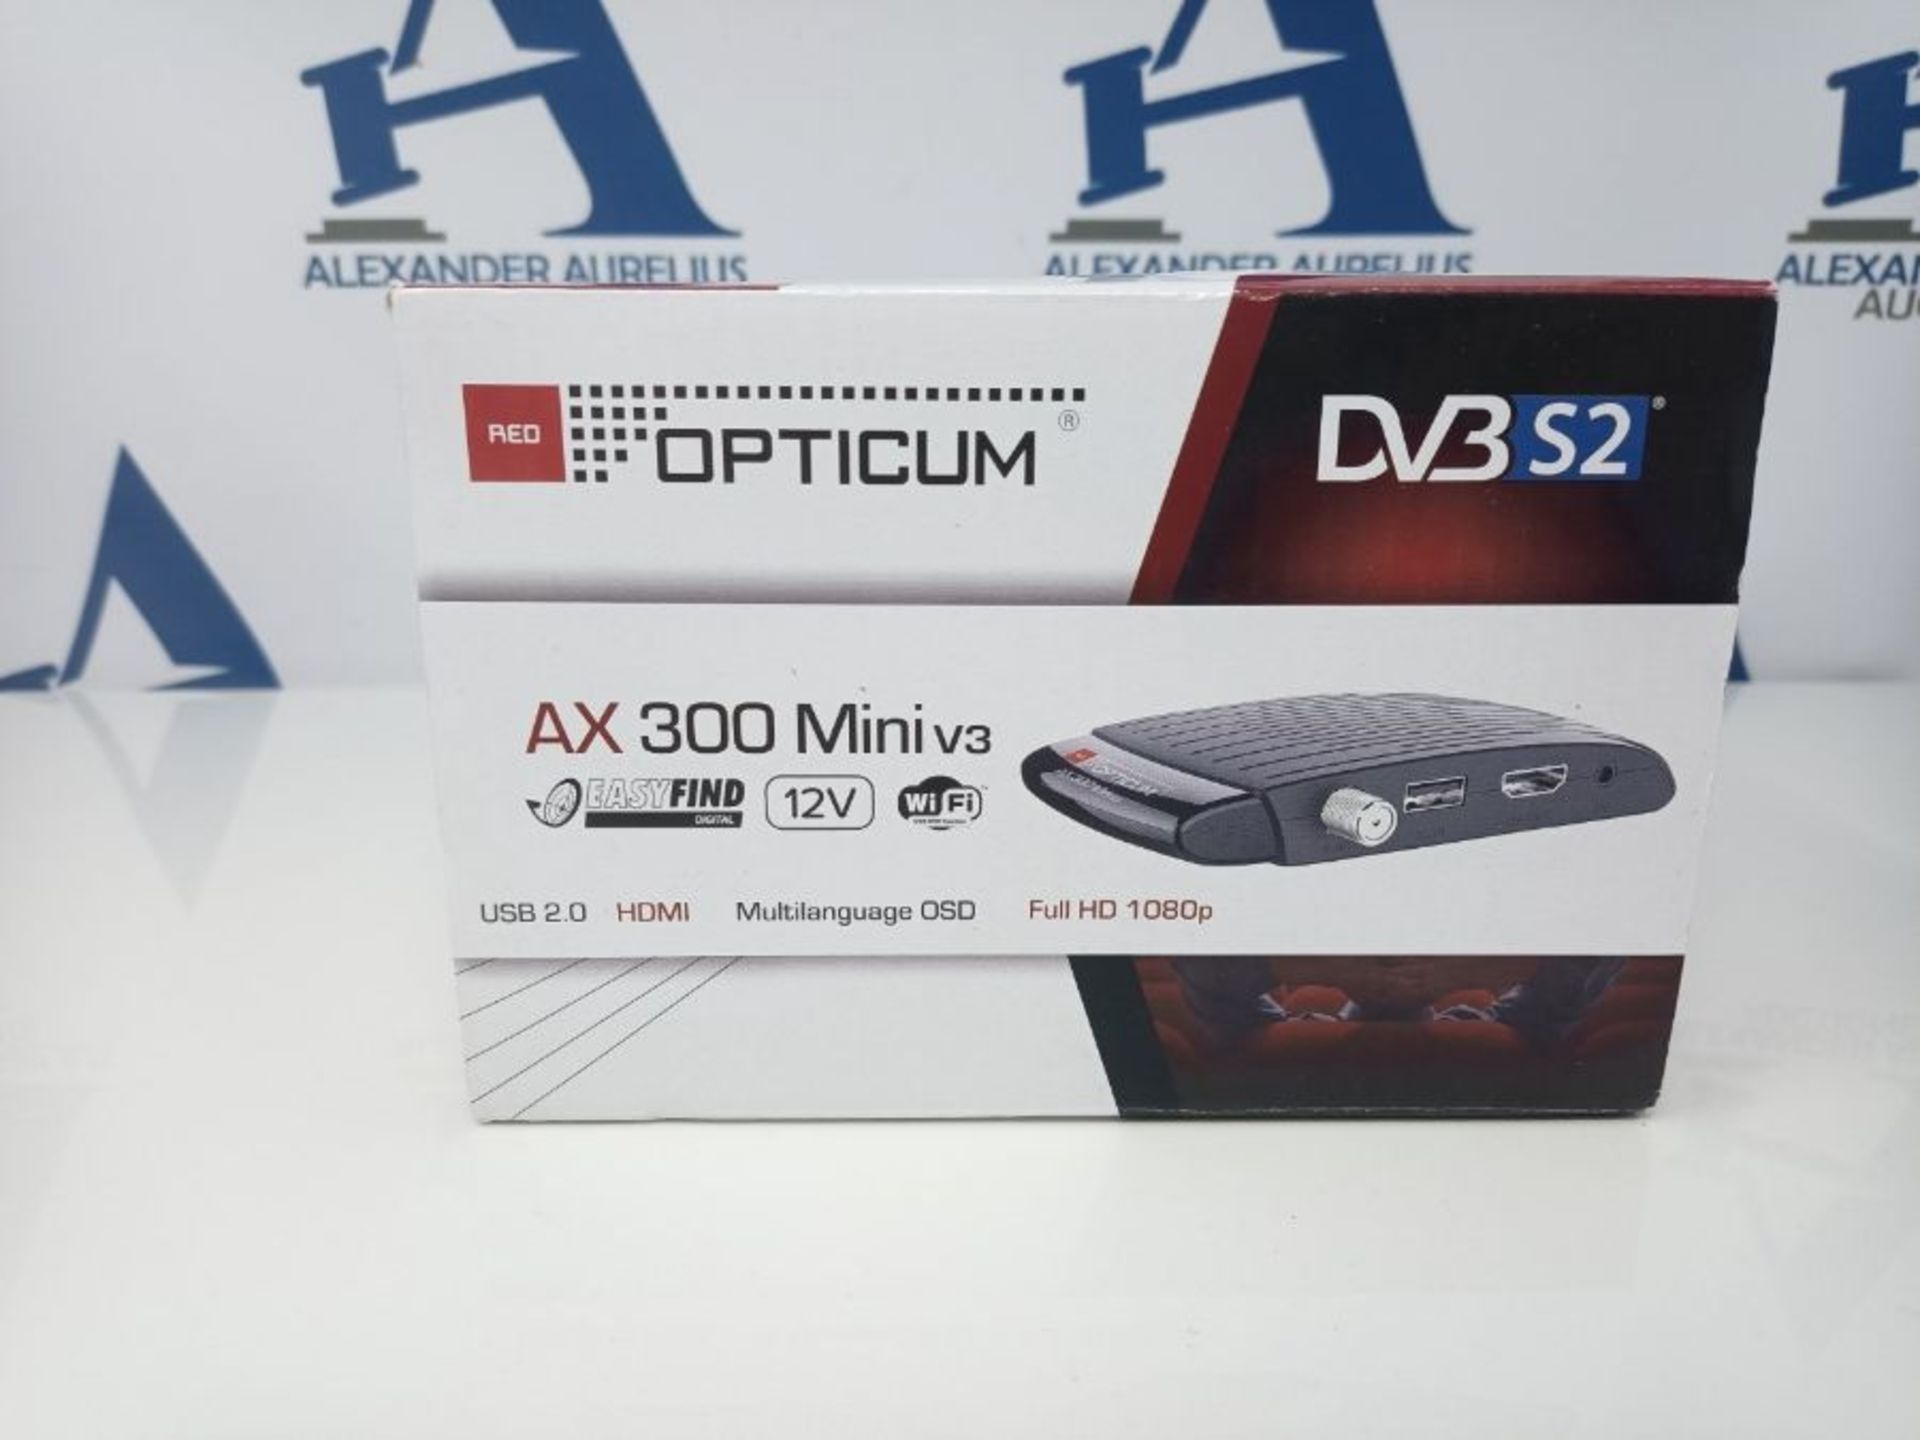 RED OPTICUM AX 300 Mini V3 Sat Receiver I Digital Satellite Receiver HD - External IR - Image 2 of 3